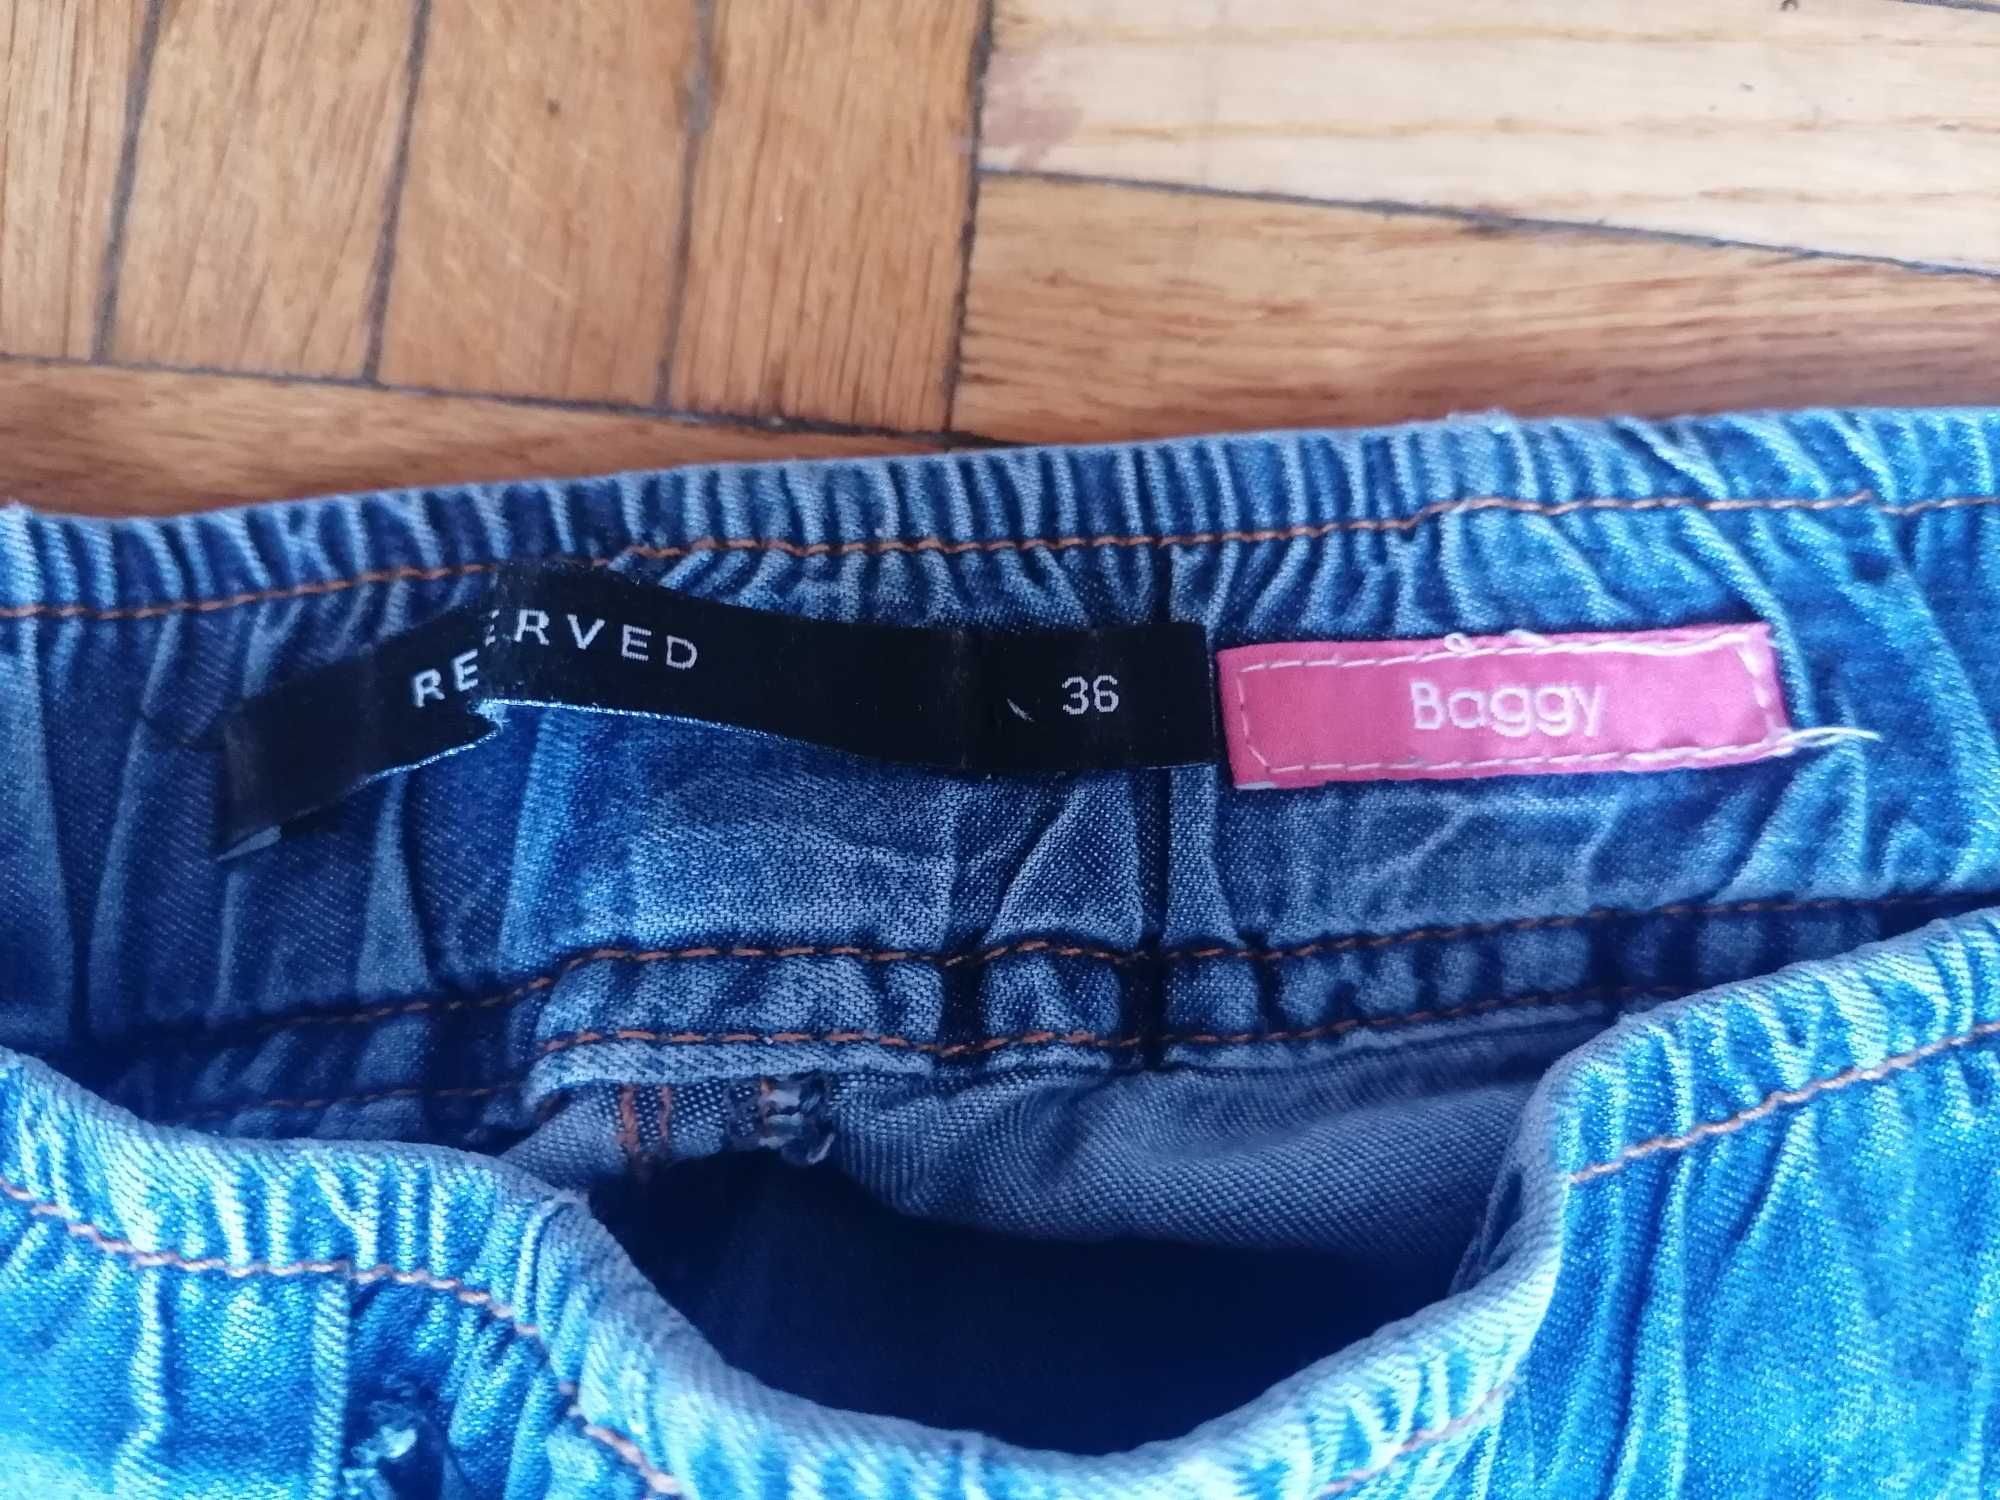 Spodnie Baggy S/36